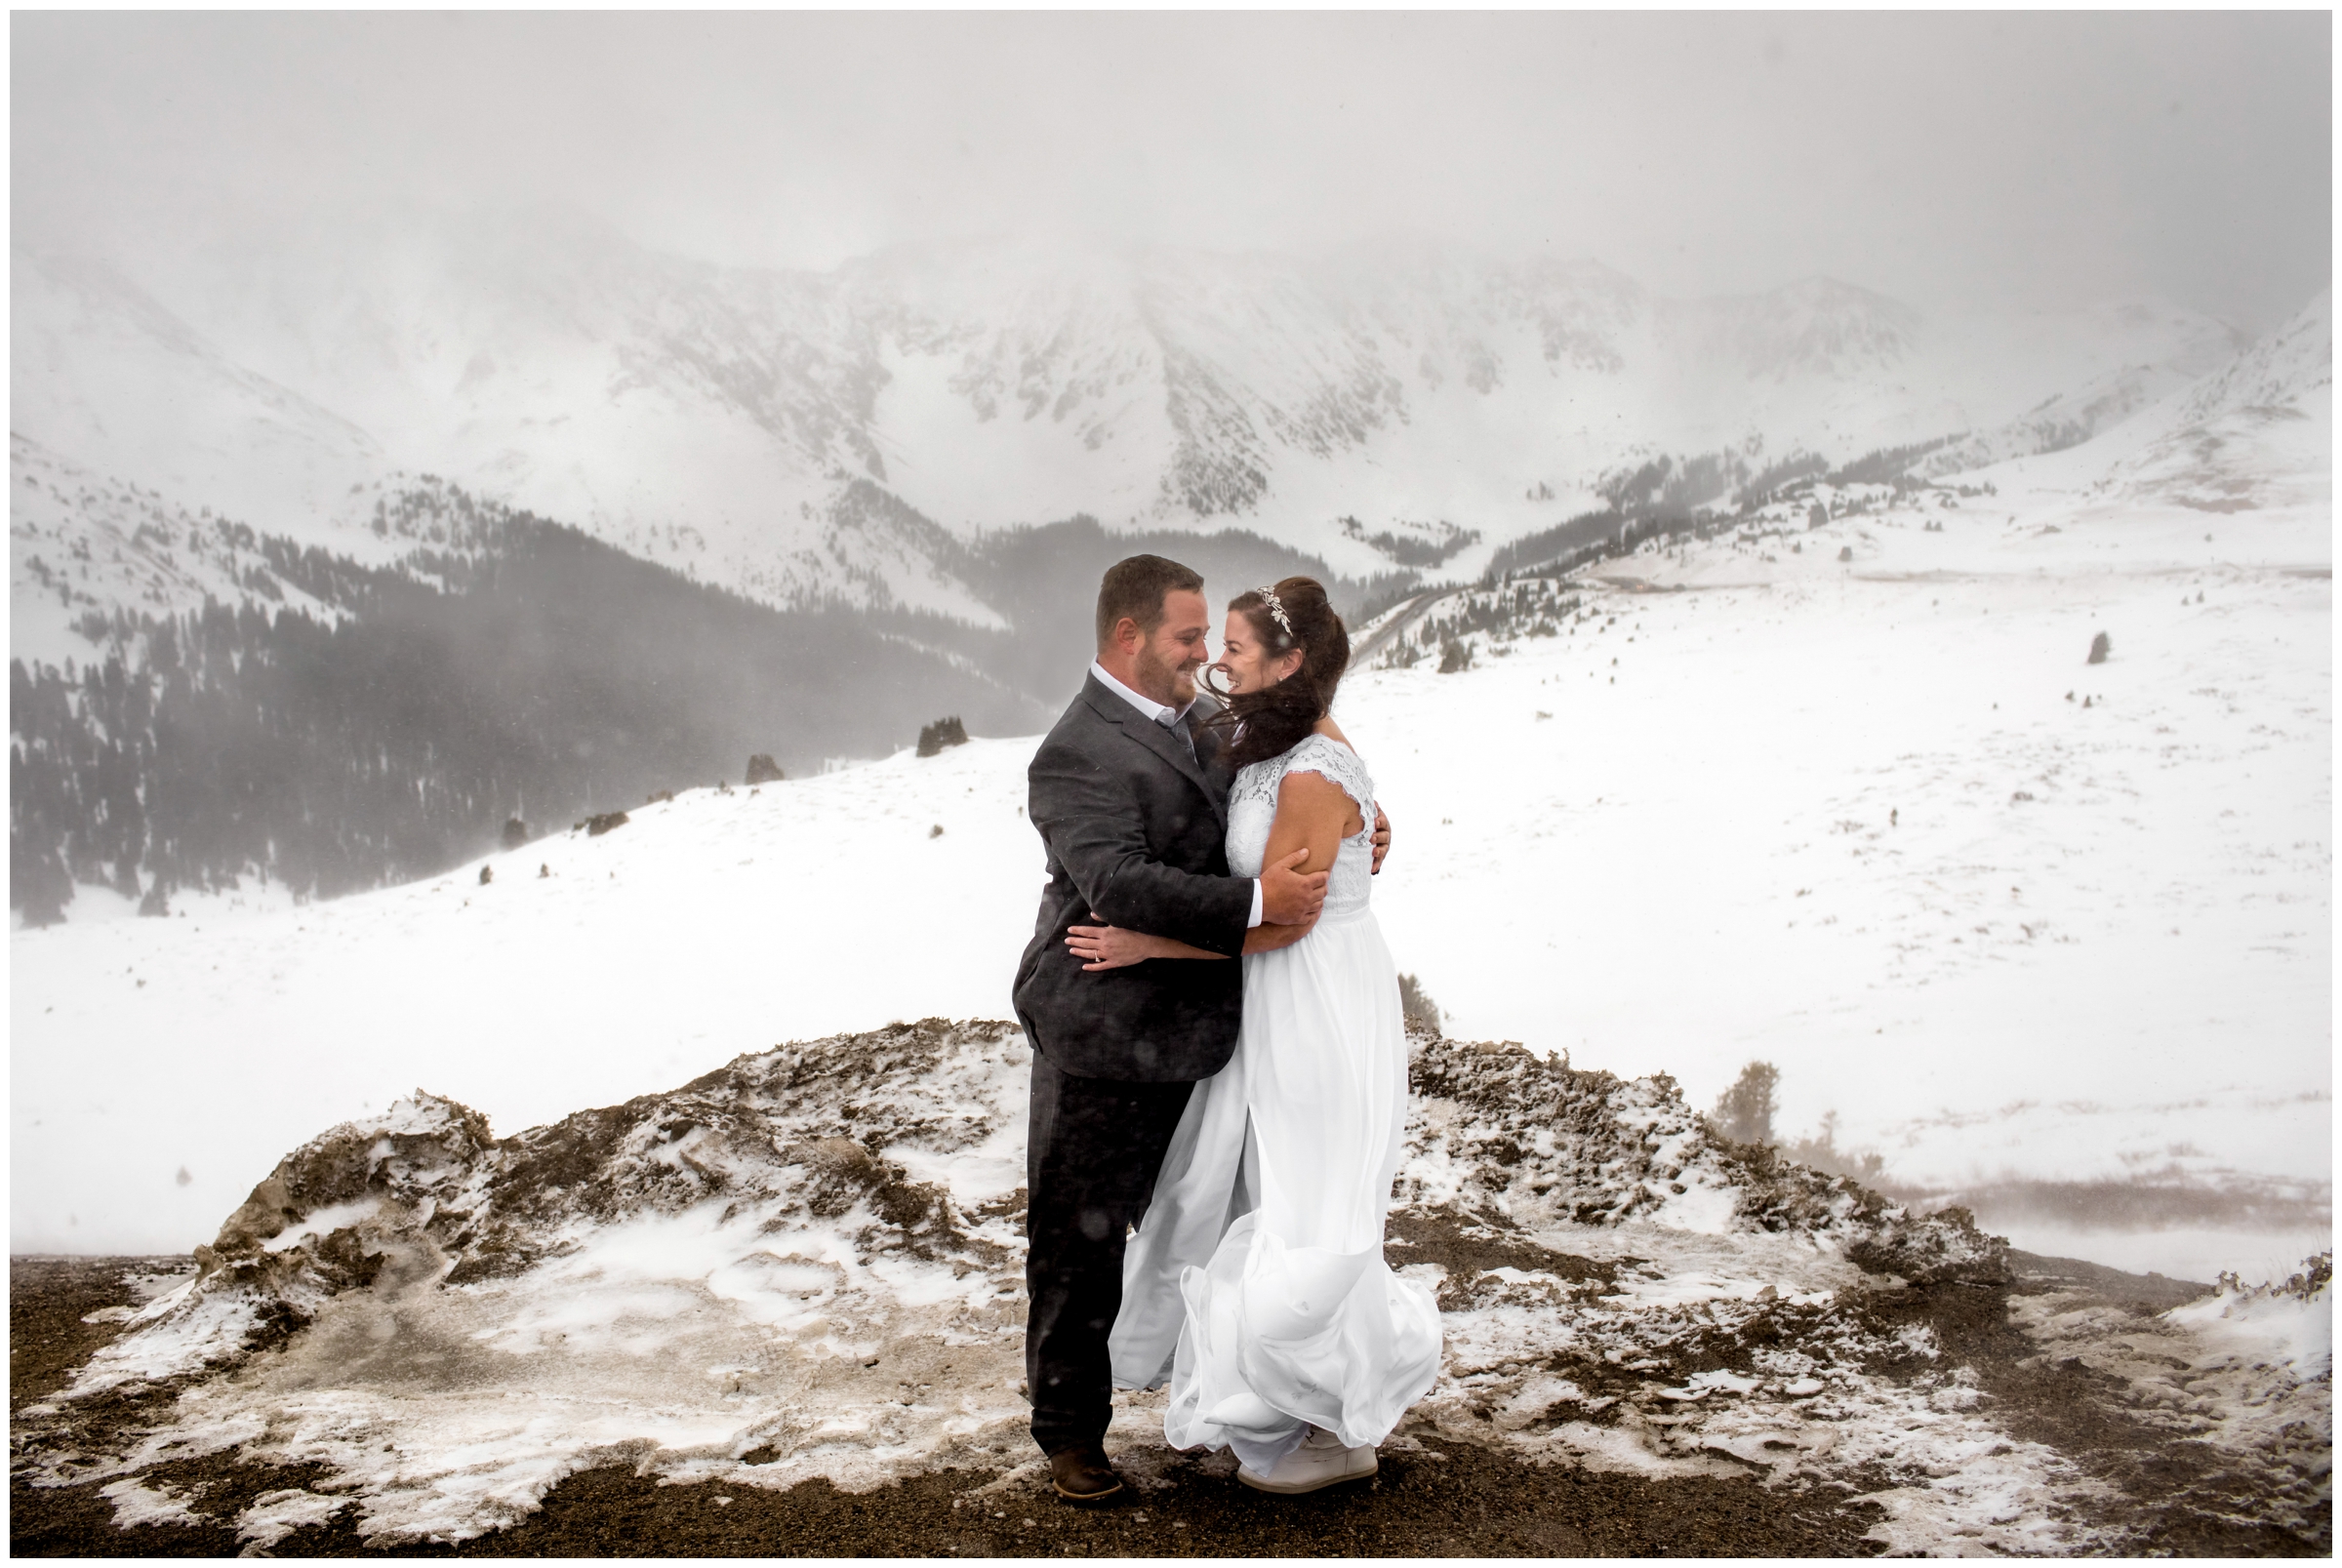 Colorado winter elopement photos by mountain wedding photographer Plum Pretty Photography